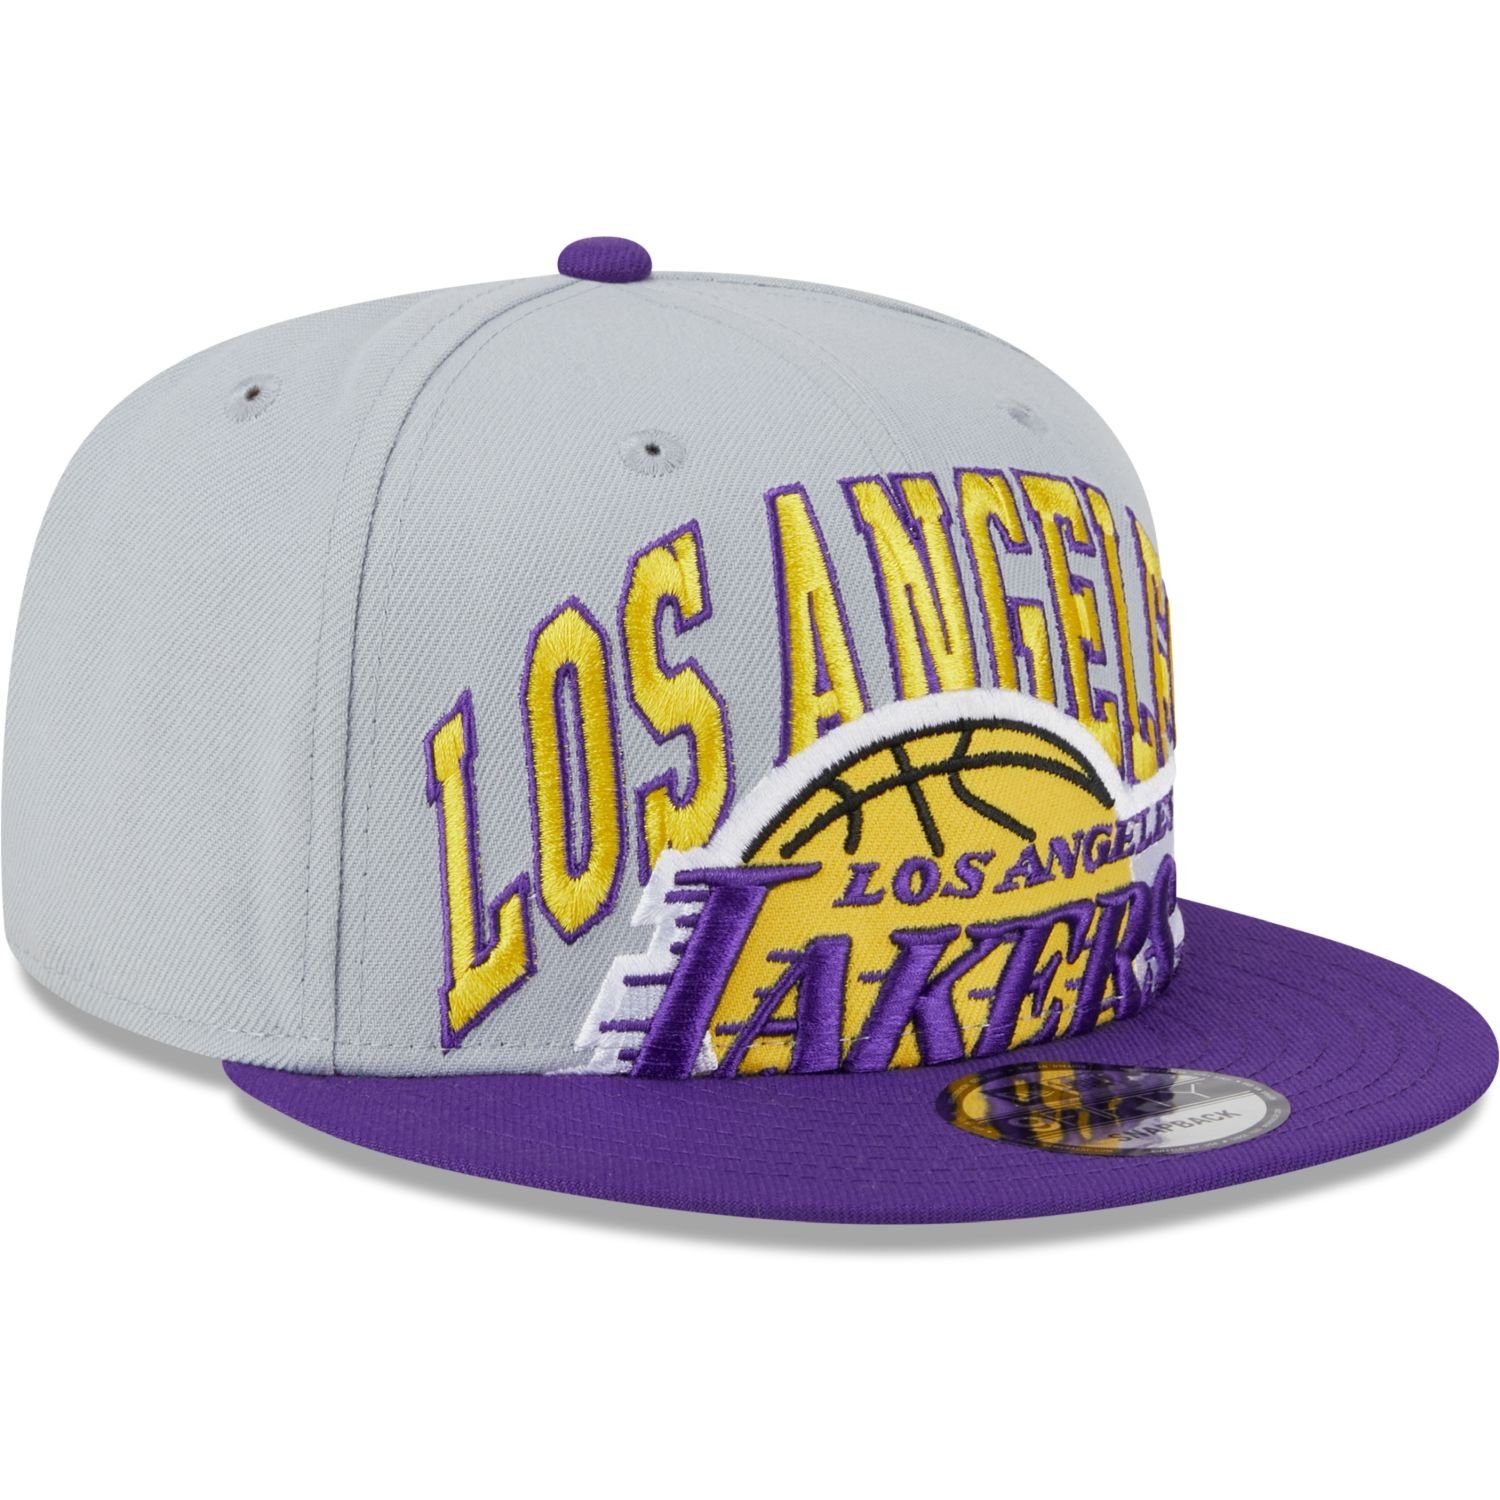 New Era Snapback Cap 9FIFTY Lakers Los NBA TIPOFF Angeles